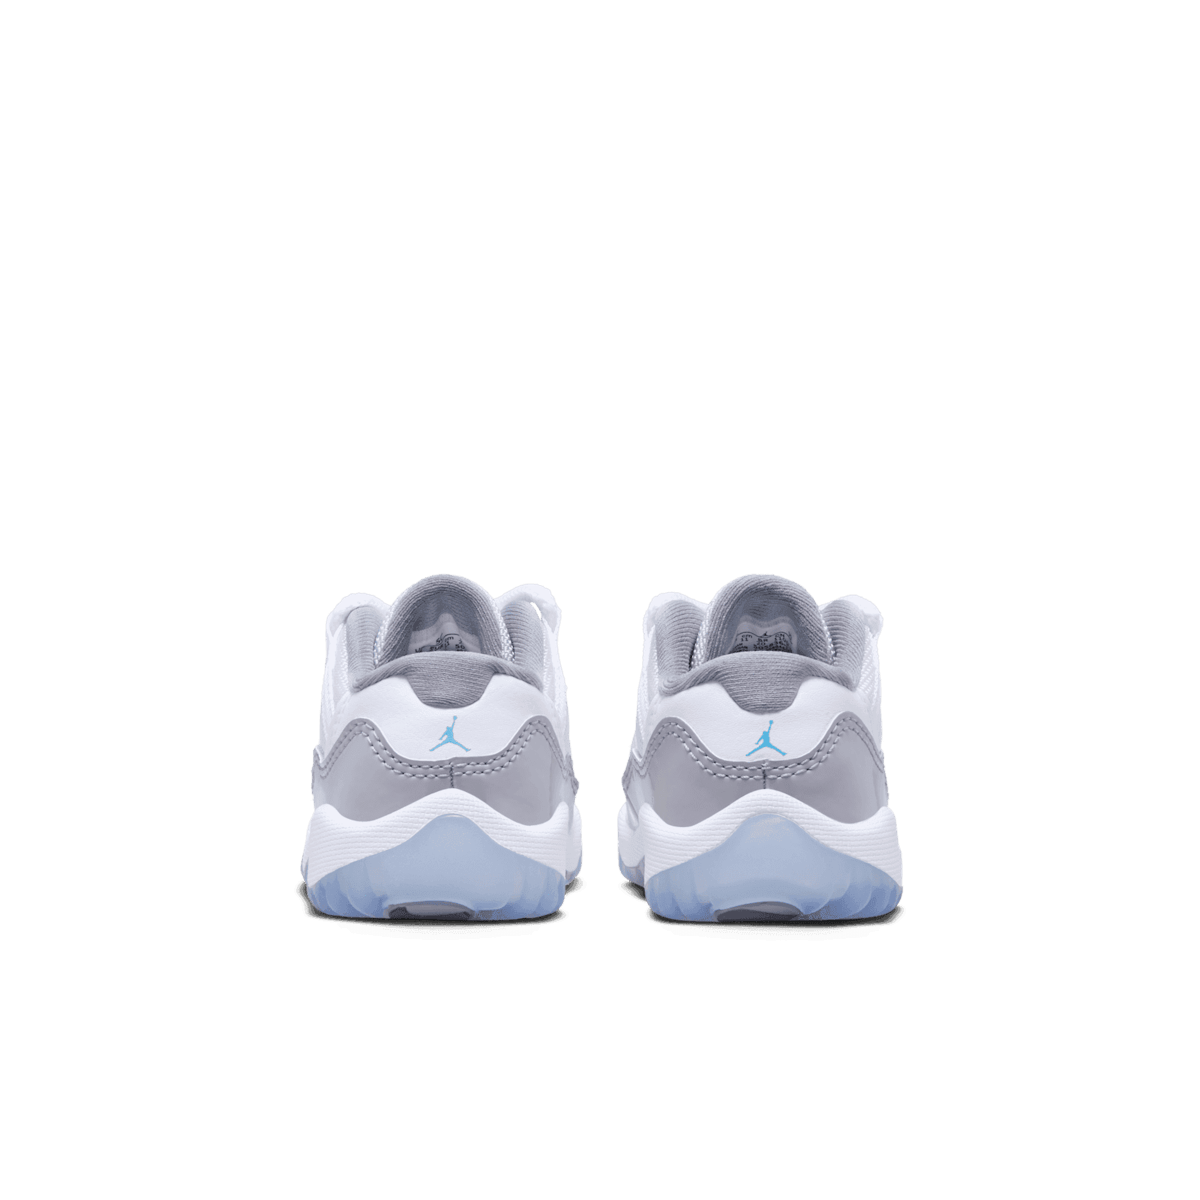 Jordan Brand Air Jordan 11 Retro Low 'Cement Grey' WHITE/UNIVERSITY BLUE- CEMENT